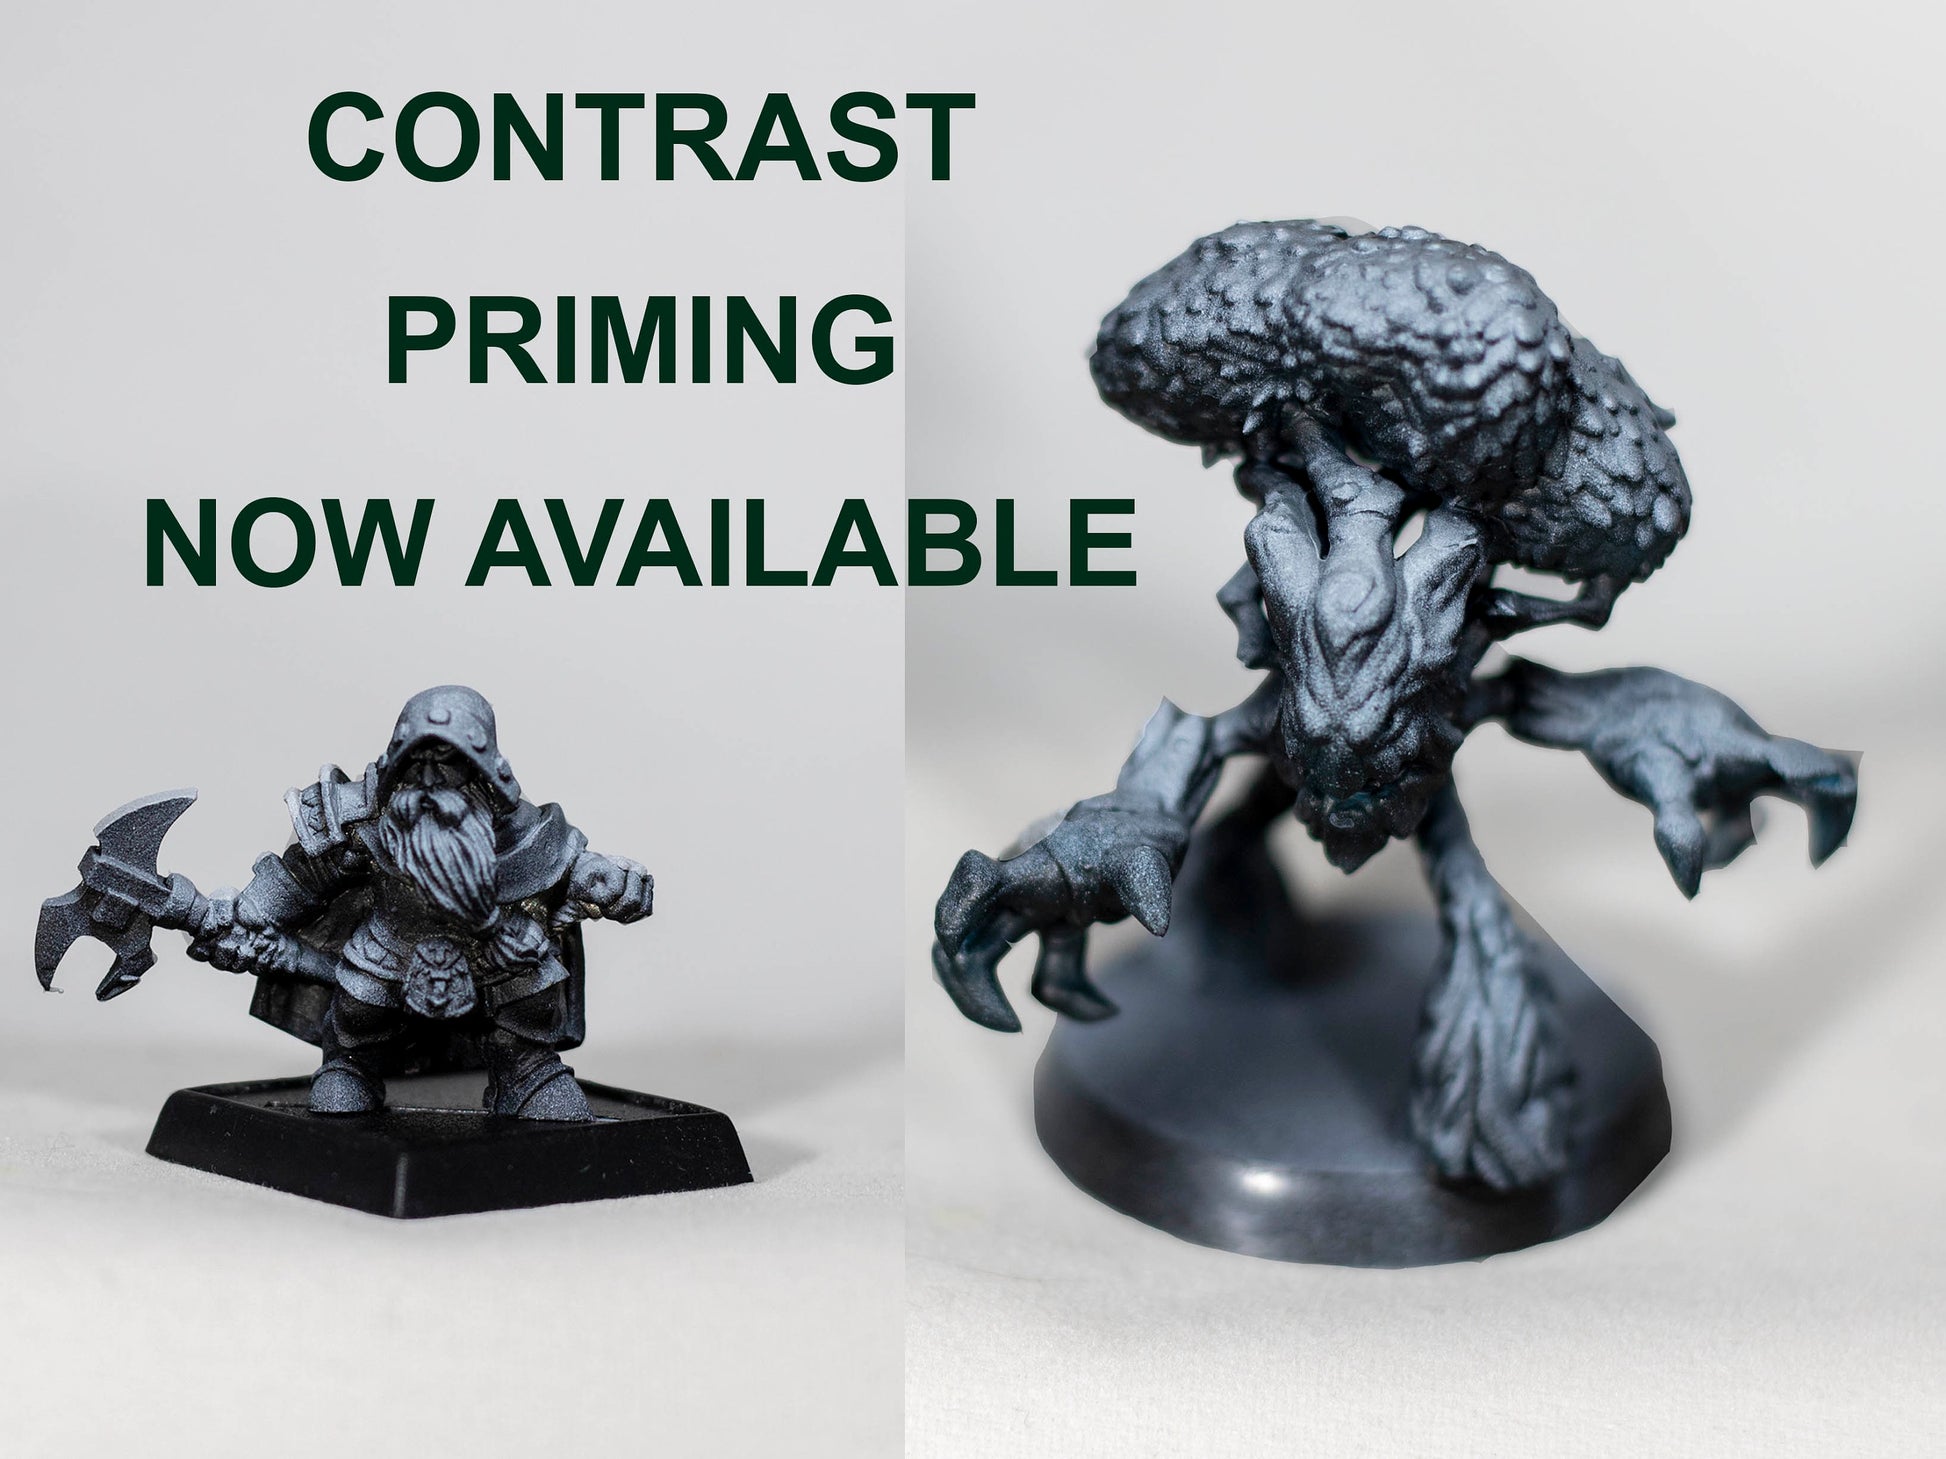 Mounted Lizard - Cast n Play Printed Miniature | Dungeons & Dragons | Pathfinder | Tabletop